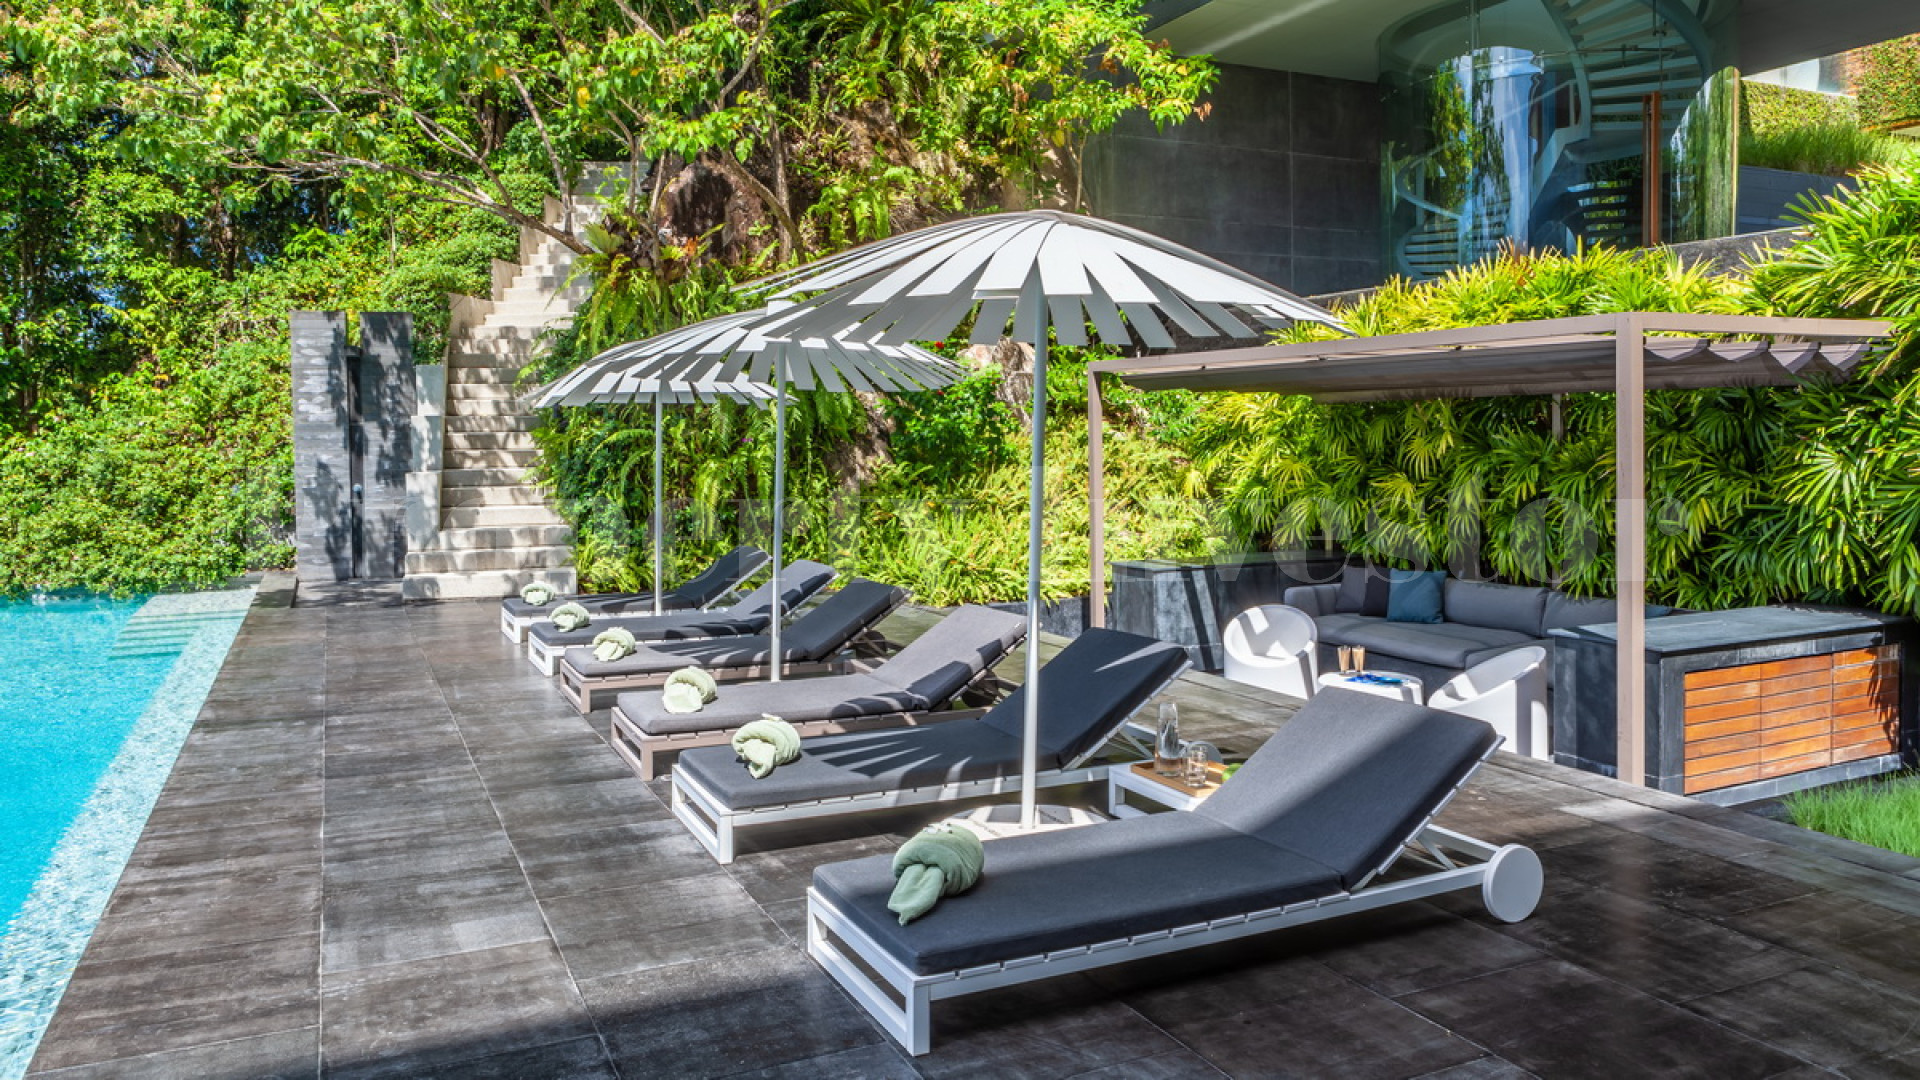 Spectacular 4 Bedroom Luxury Oceanview Villa for Sale on "Millionaire Mile" in Kamala, Phuket